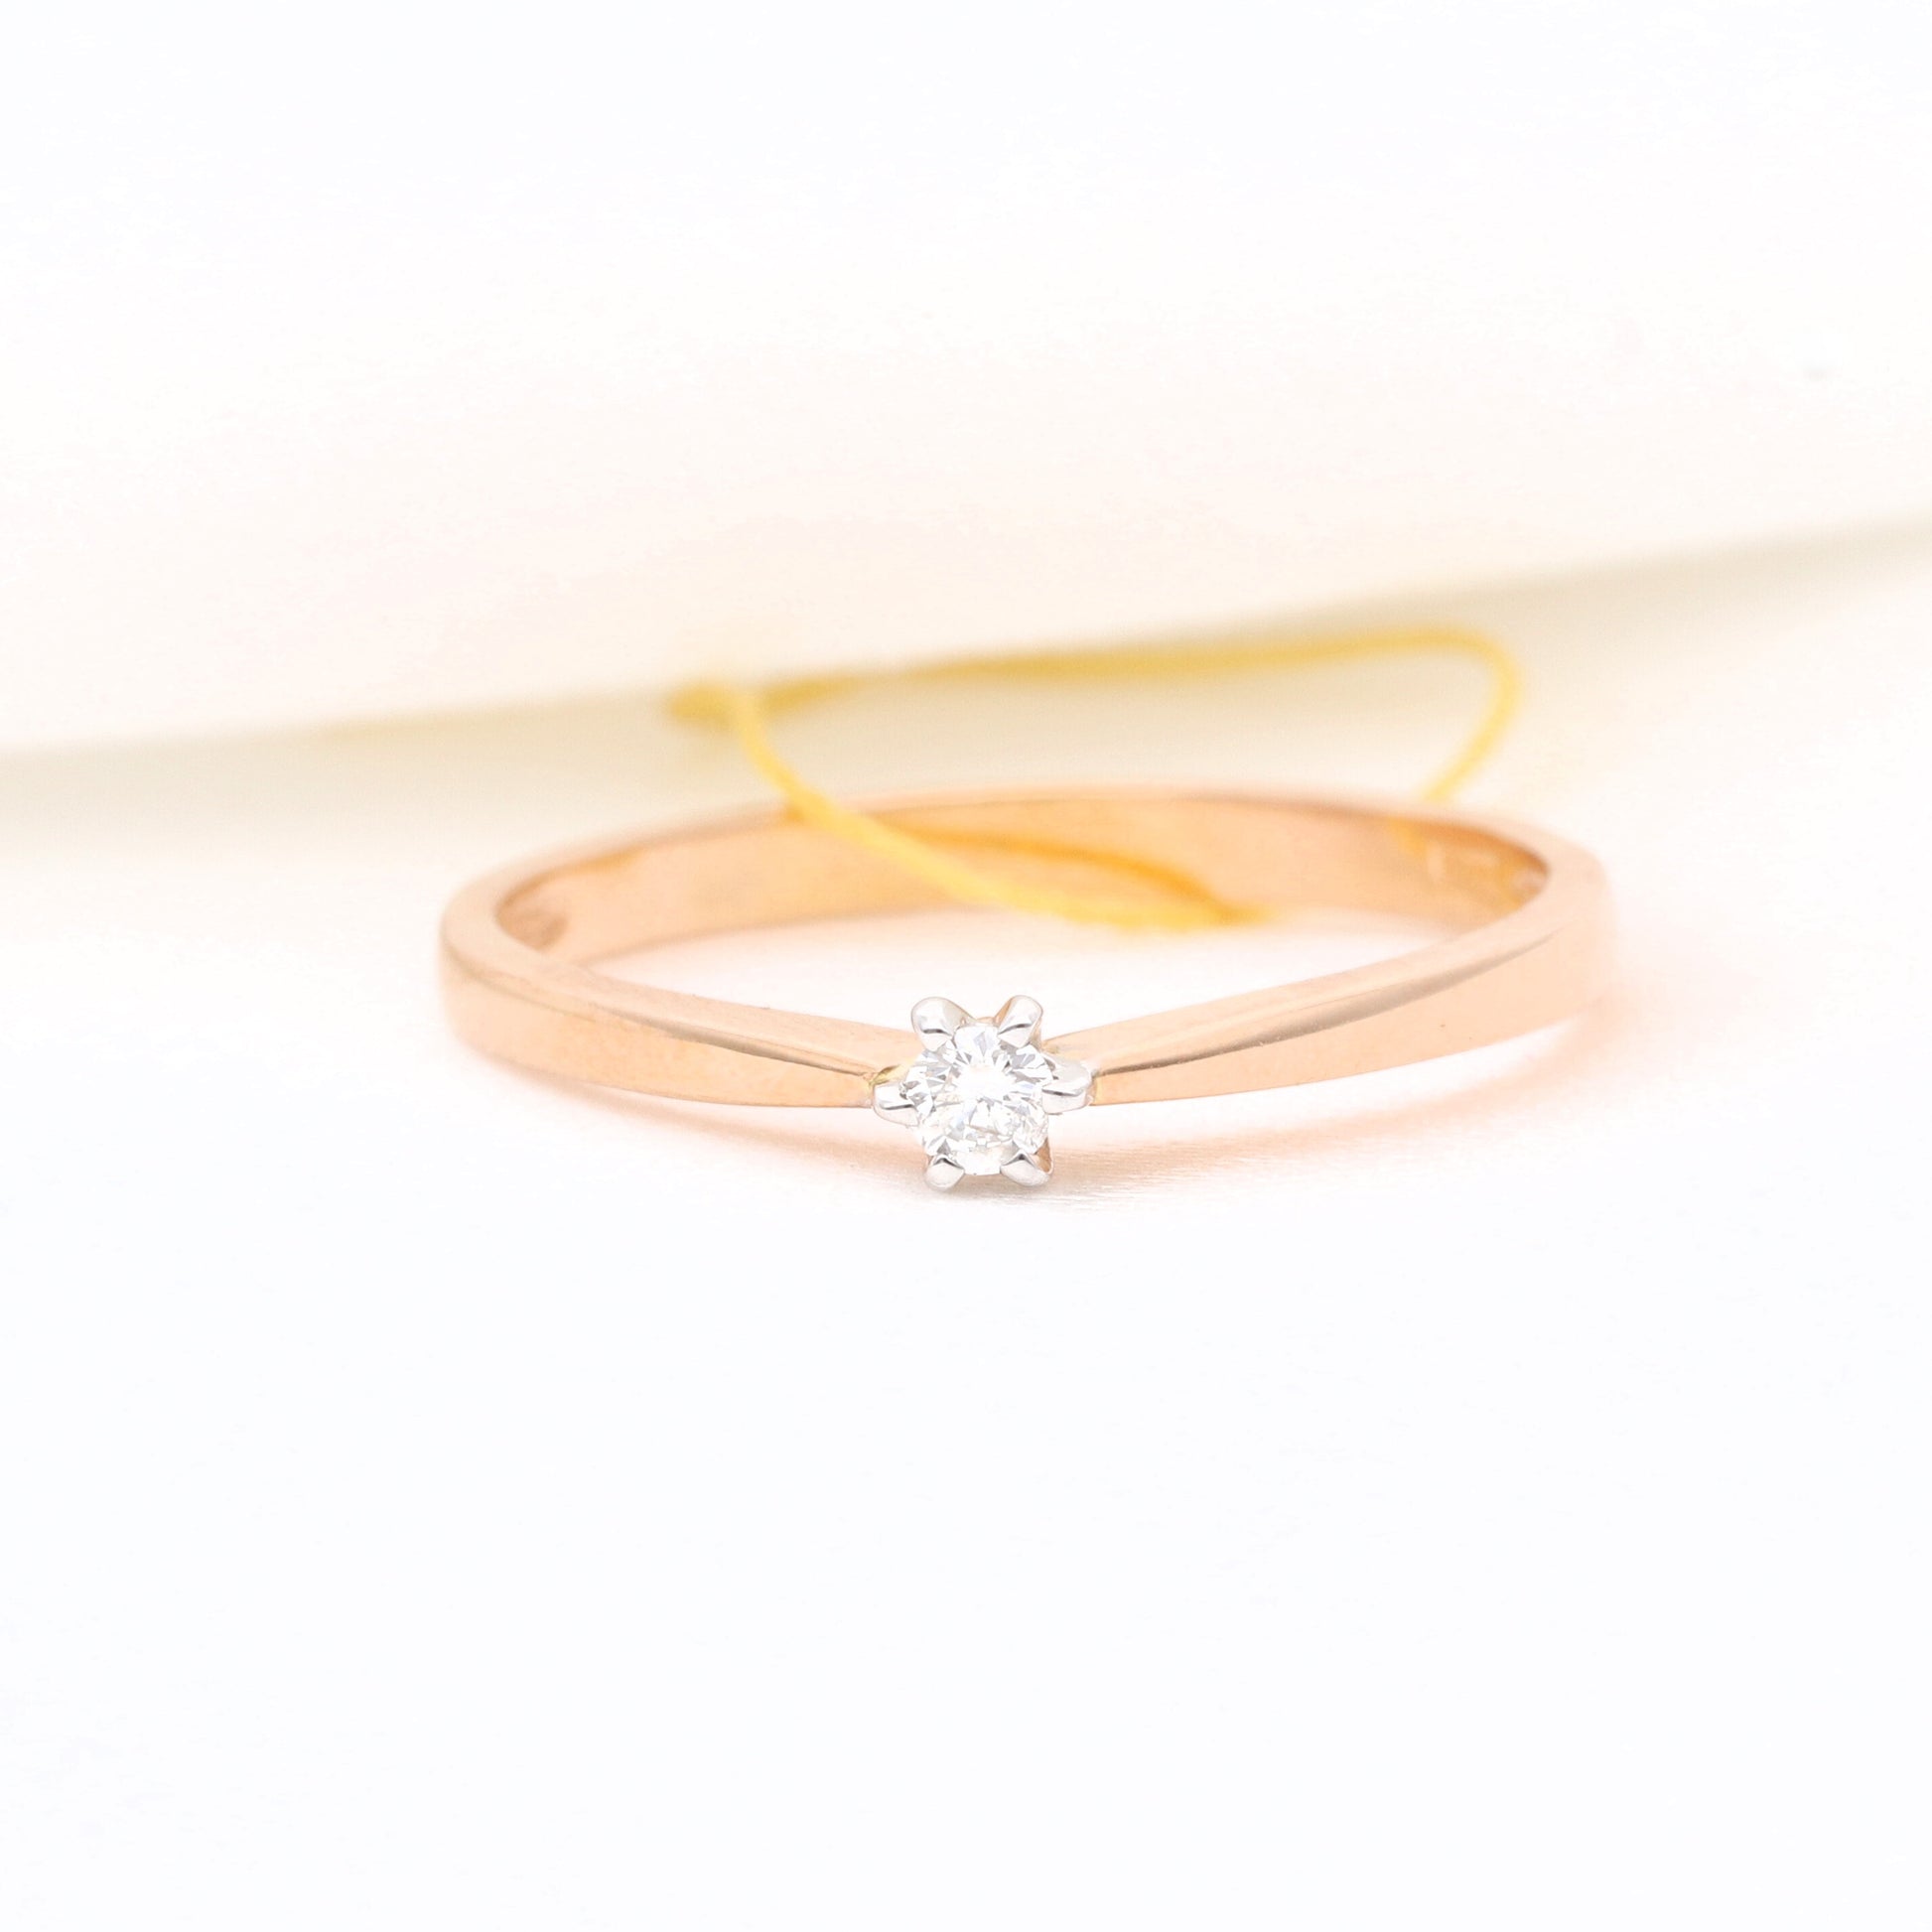 Auksinis žiedas su deimantu vestuviniaiziedai.lt